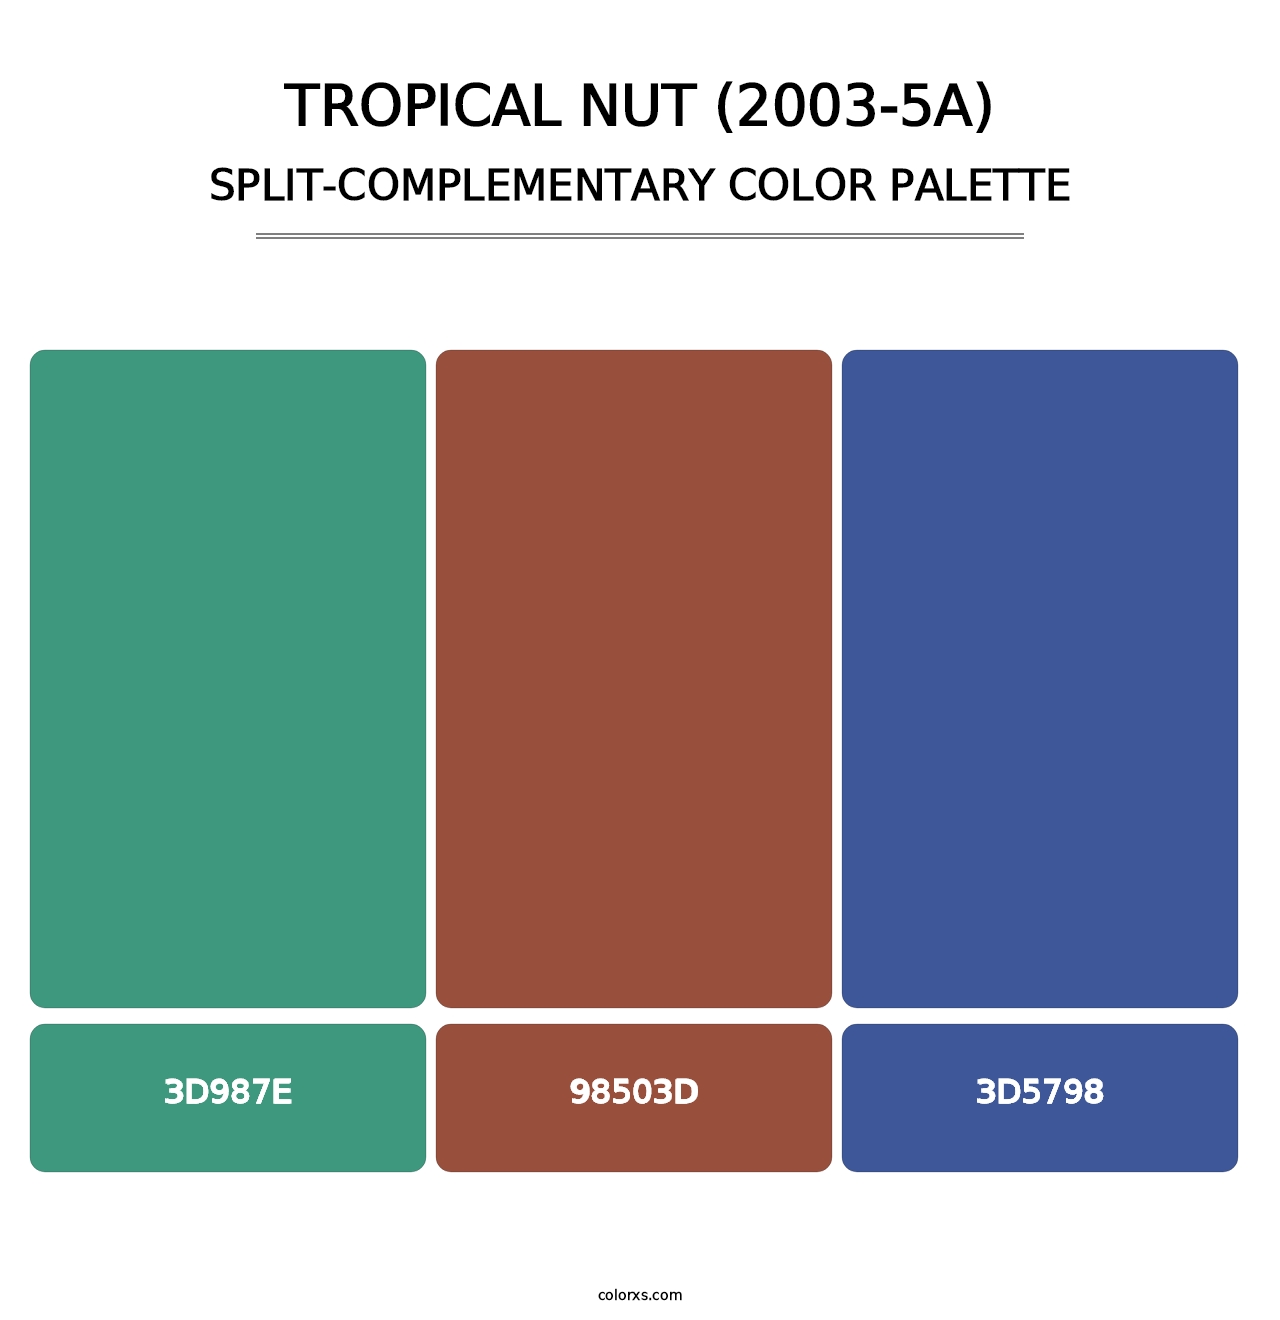 Tropical Nut (2003-5A) - Split-Complementary Color Palette